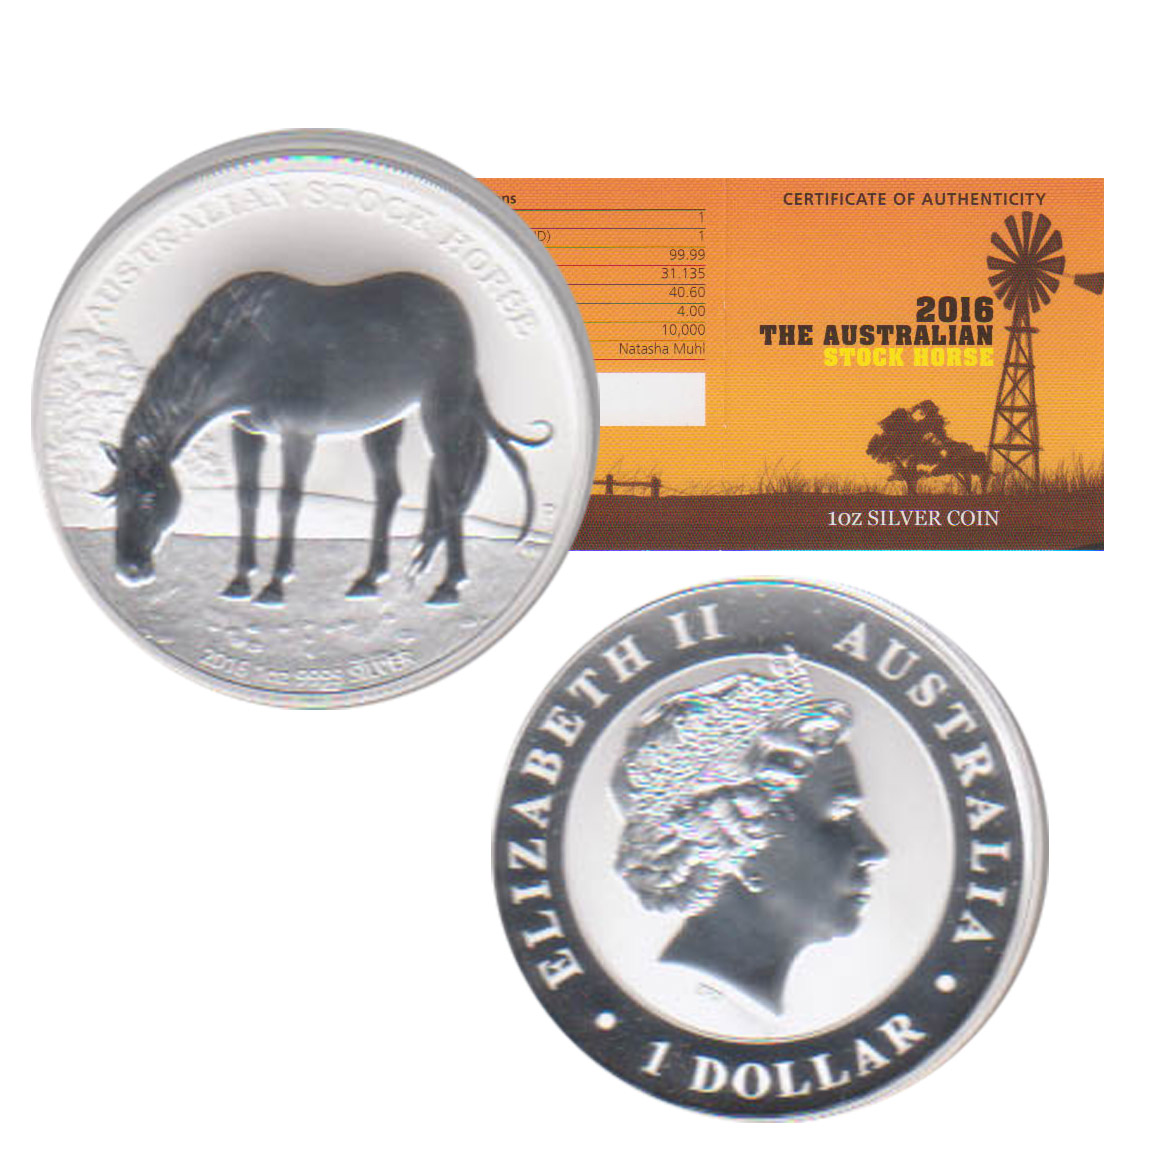  Australien 1$ Silbermünze *Stock Horse* 2016 1oz Silber nur 10.000 Stück!   